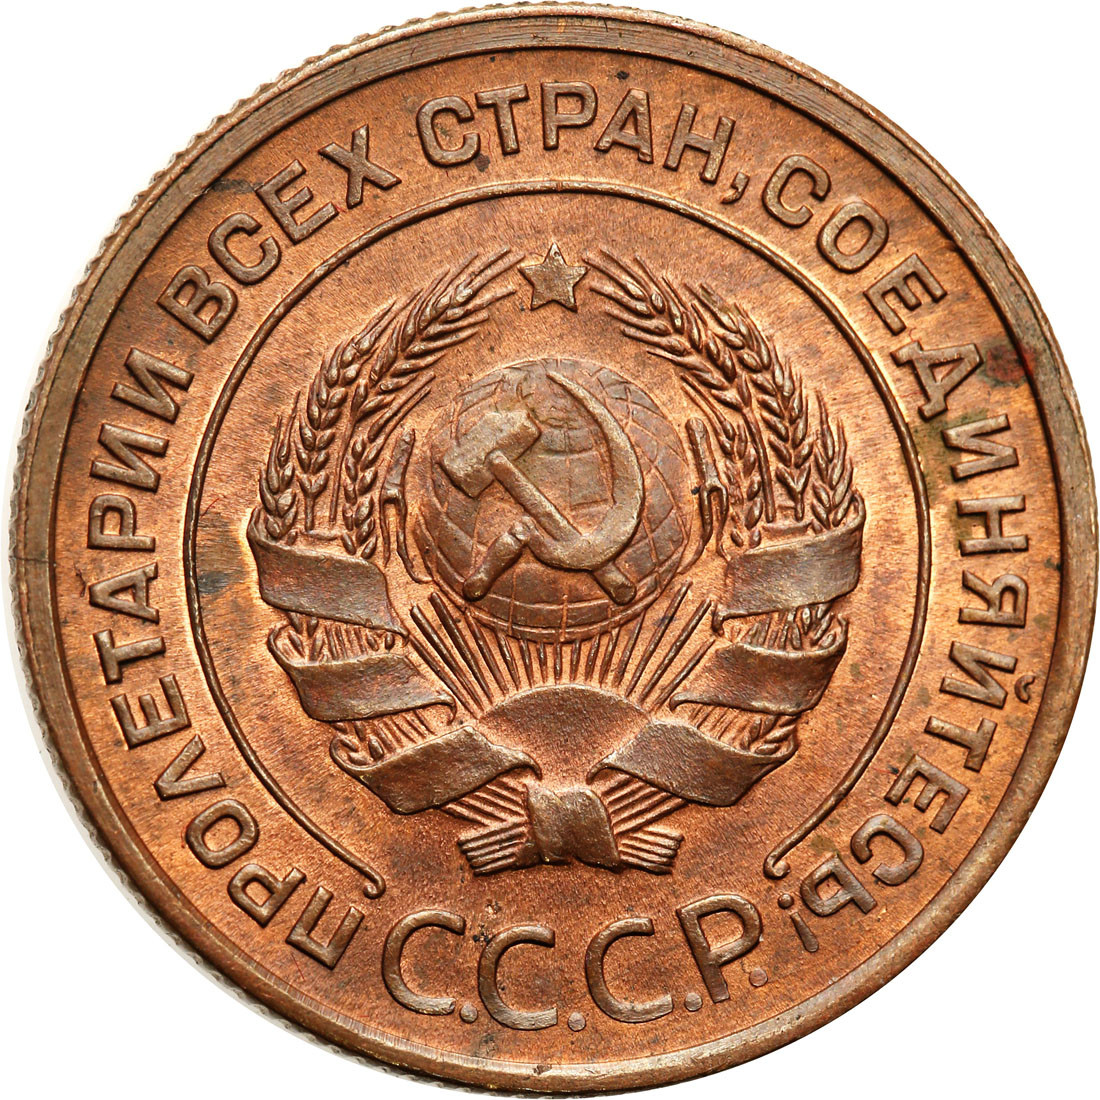 Rosja, ZSRR. 2 kopiejki 1924, Petersburg